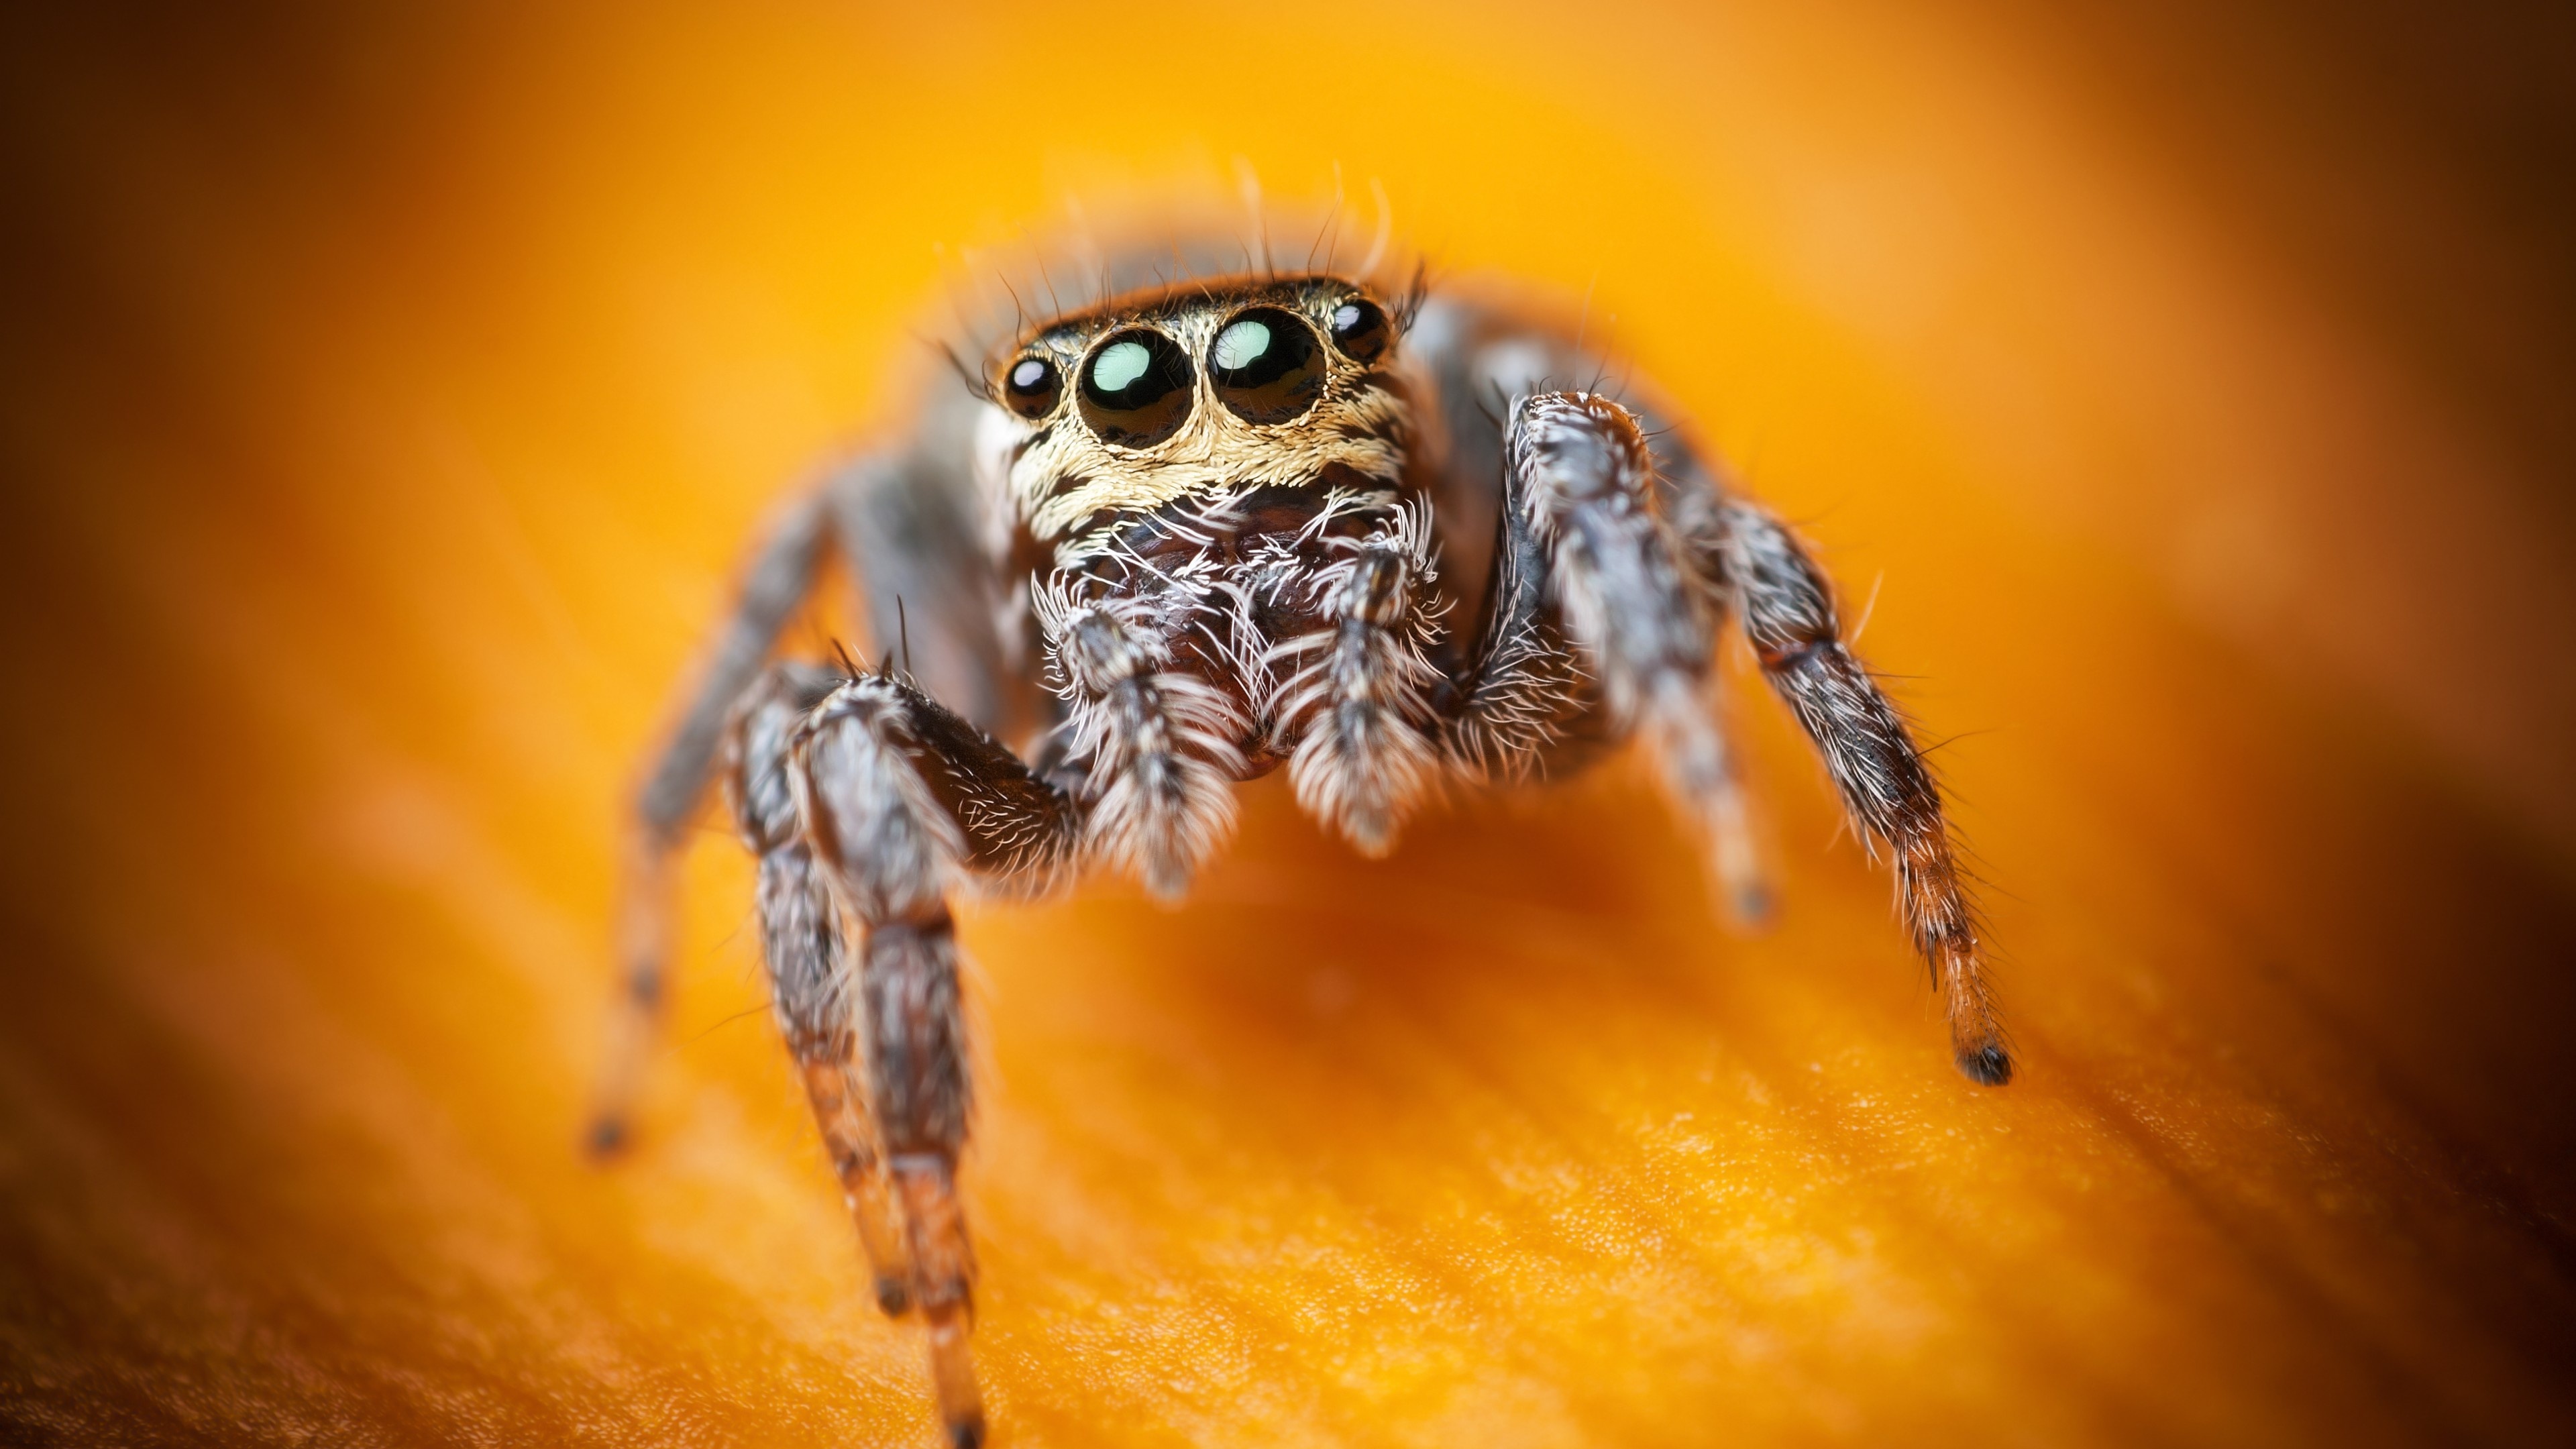 Jumping spider wallpaper, Macro photography, Black eyes, Stunning arachnid, 3840x2160 4K Desktop